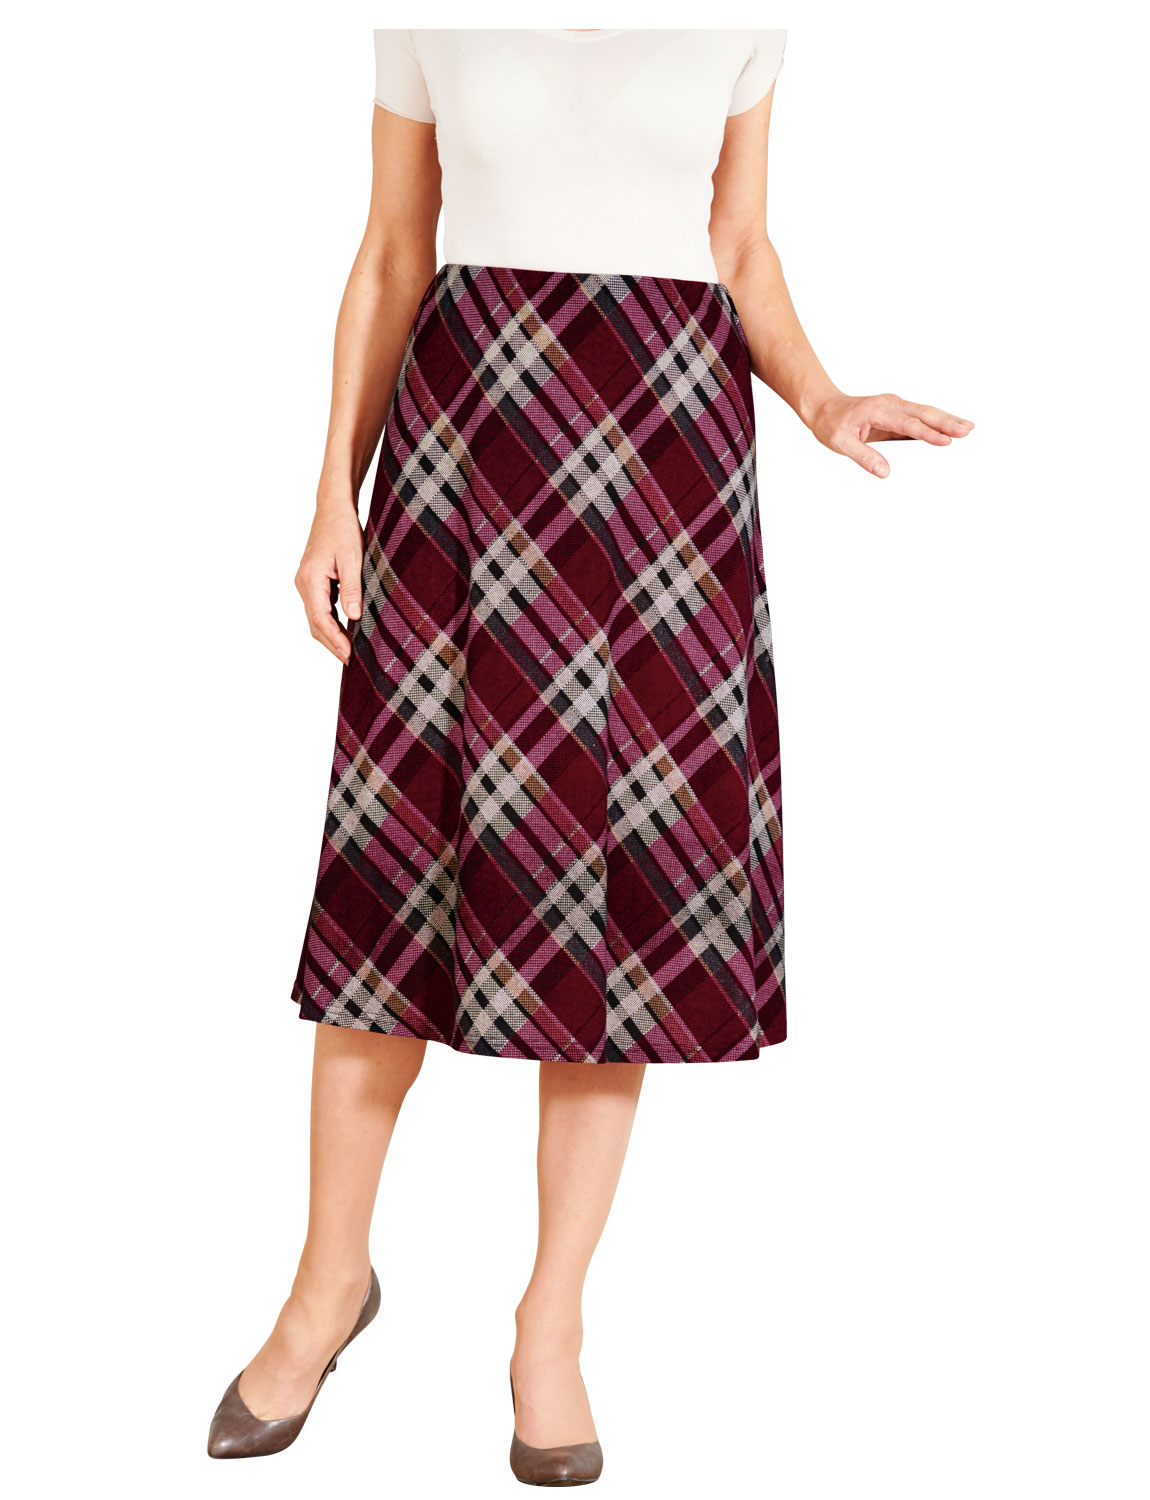 Ladies Warm Handle Skirt Length 25 Inches | eBay